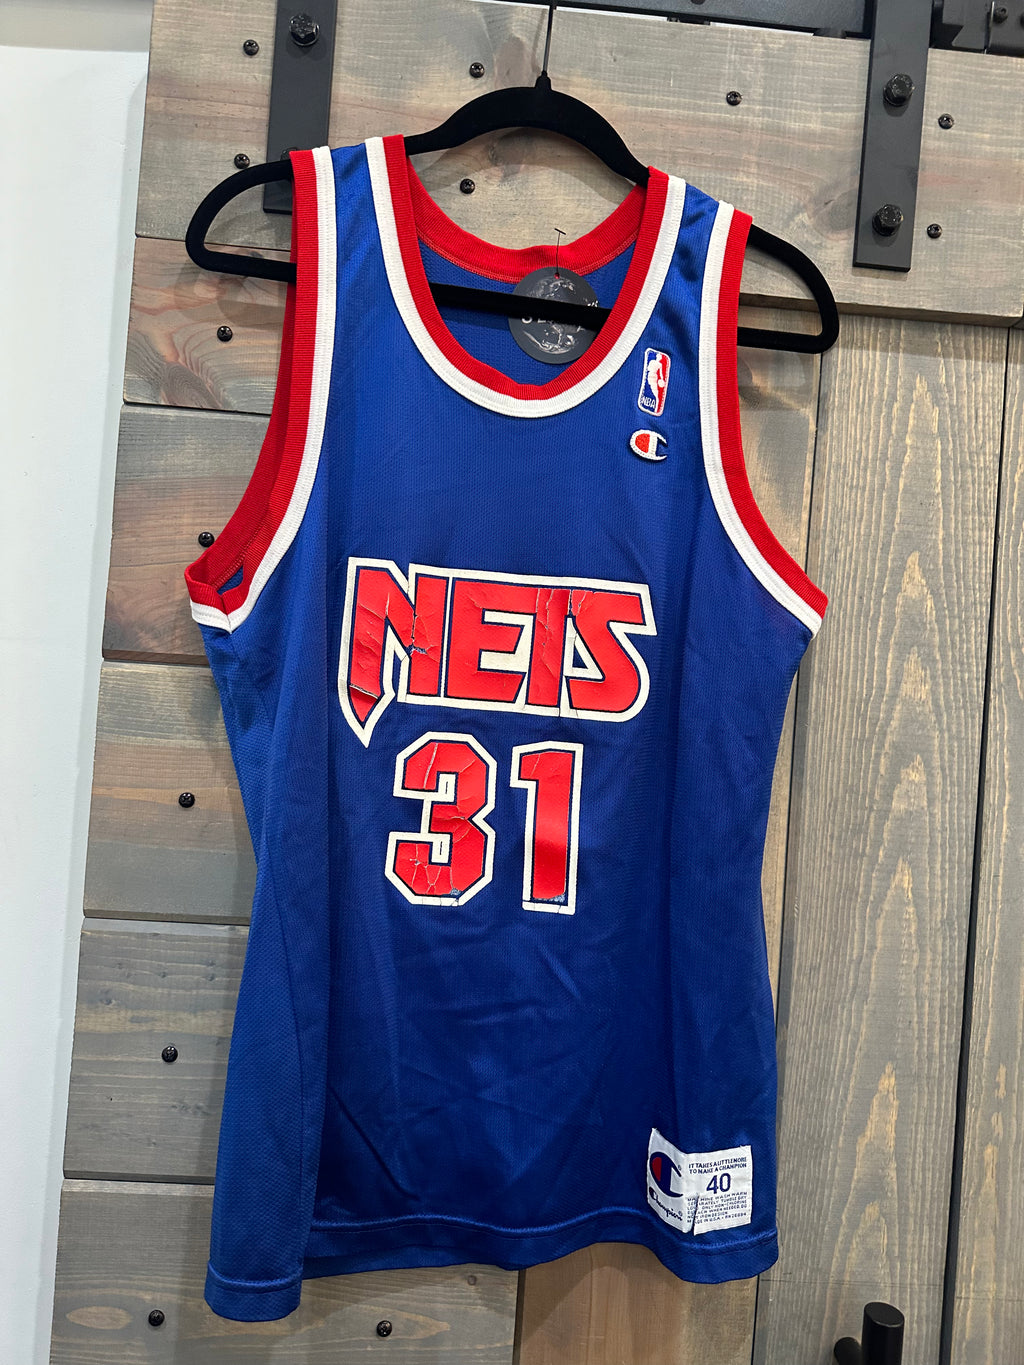 Brooklyn Nets Ed O'Bannon Jersey